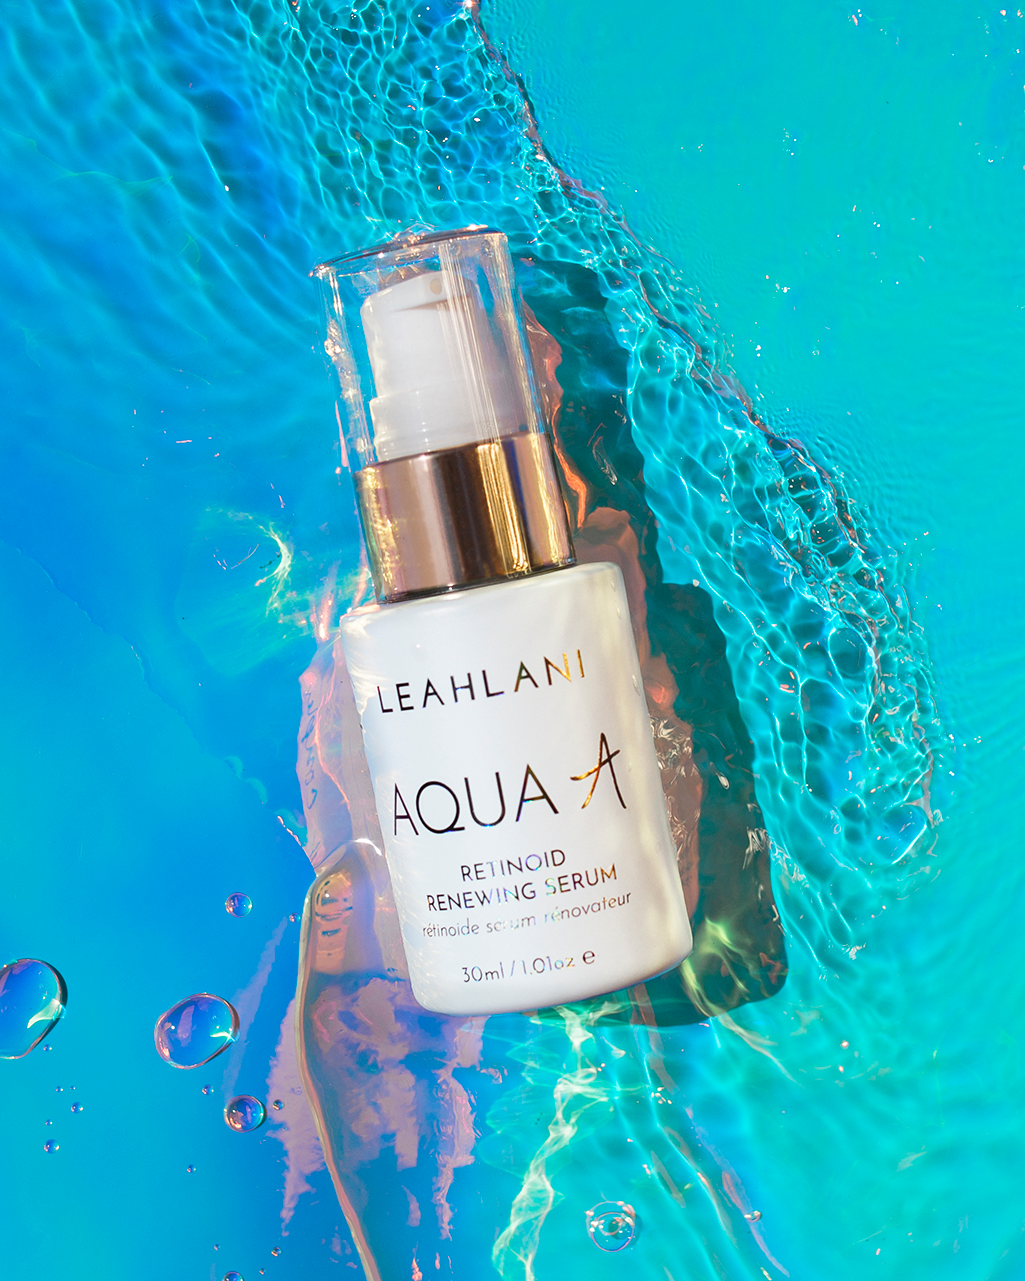 Leahlani Aqua A Retinoid Renewing Serum at Socialite Beauty Canada